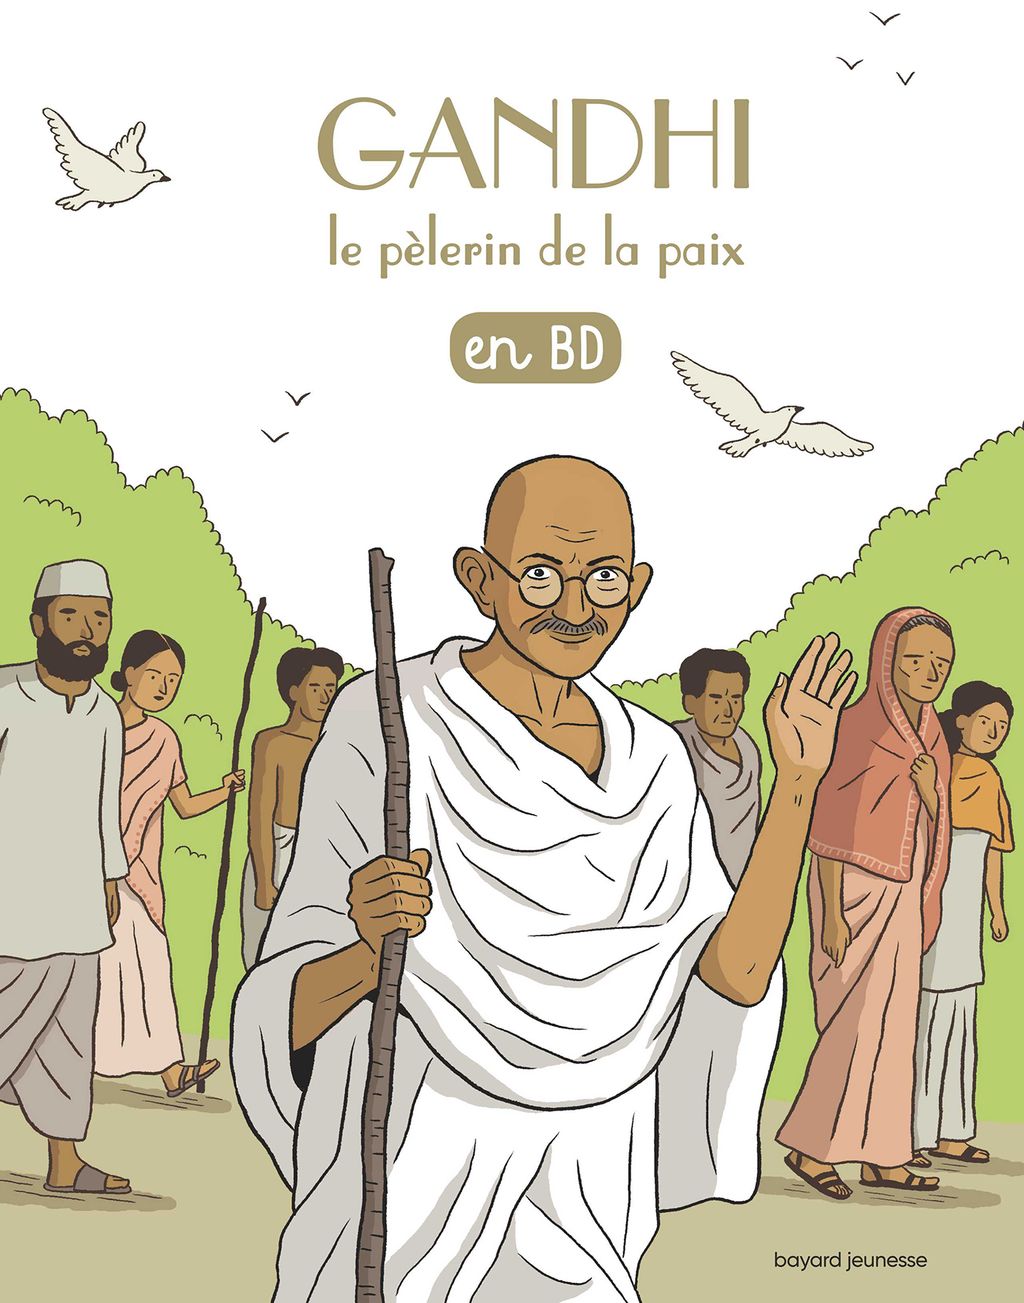 « Gandhi, le pèlerin de la paix, en BD » cover